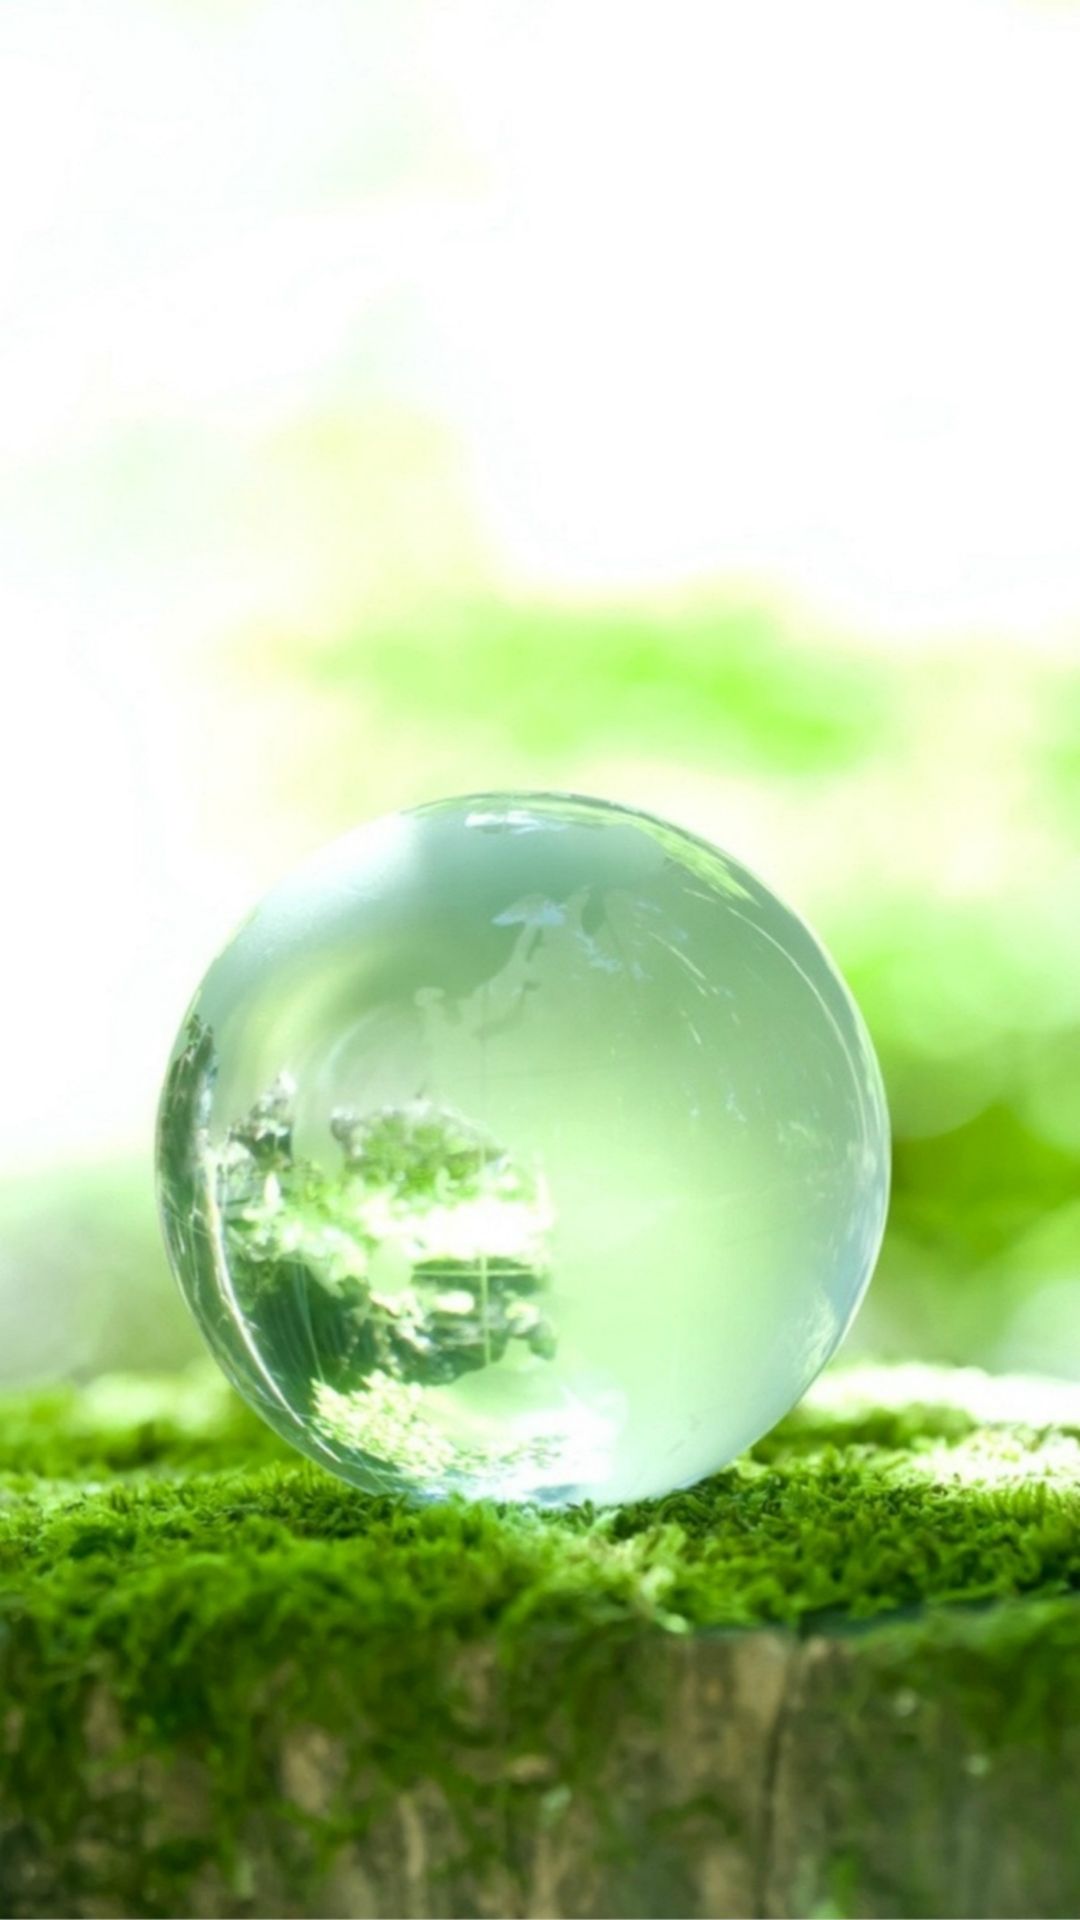 Pure Crystal Cyan Glass Ball Moss Macro iPhone Wallpaper